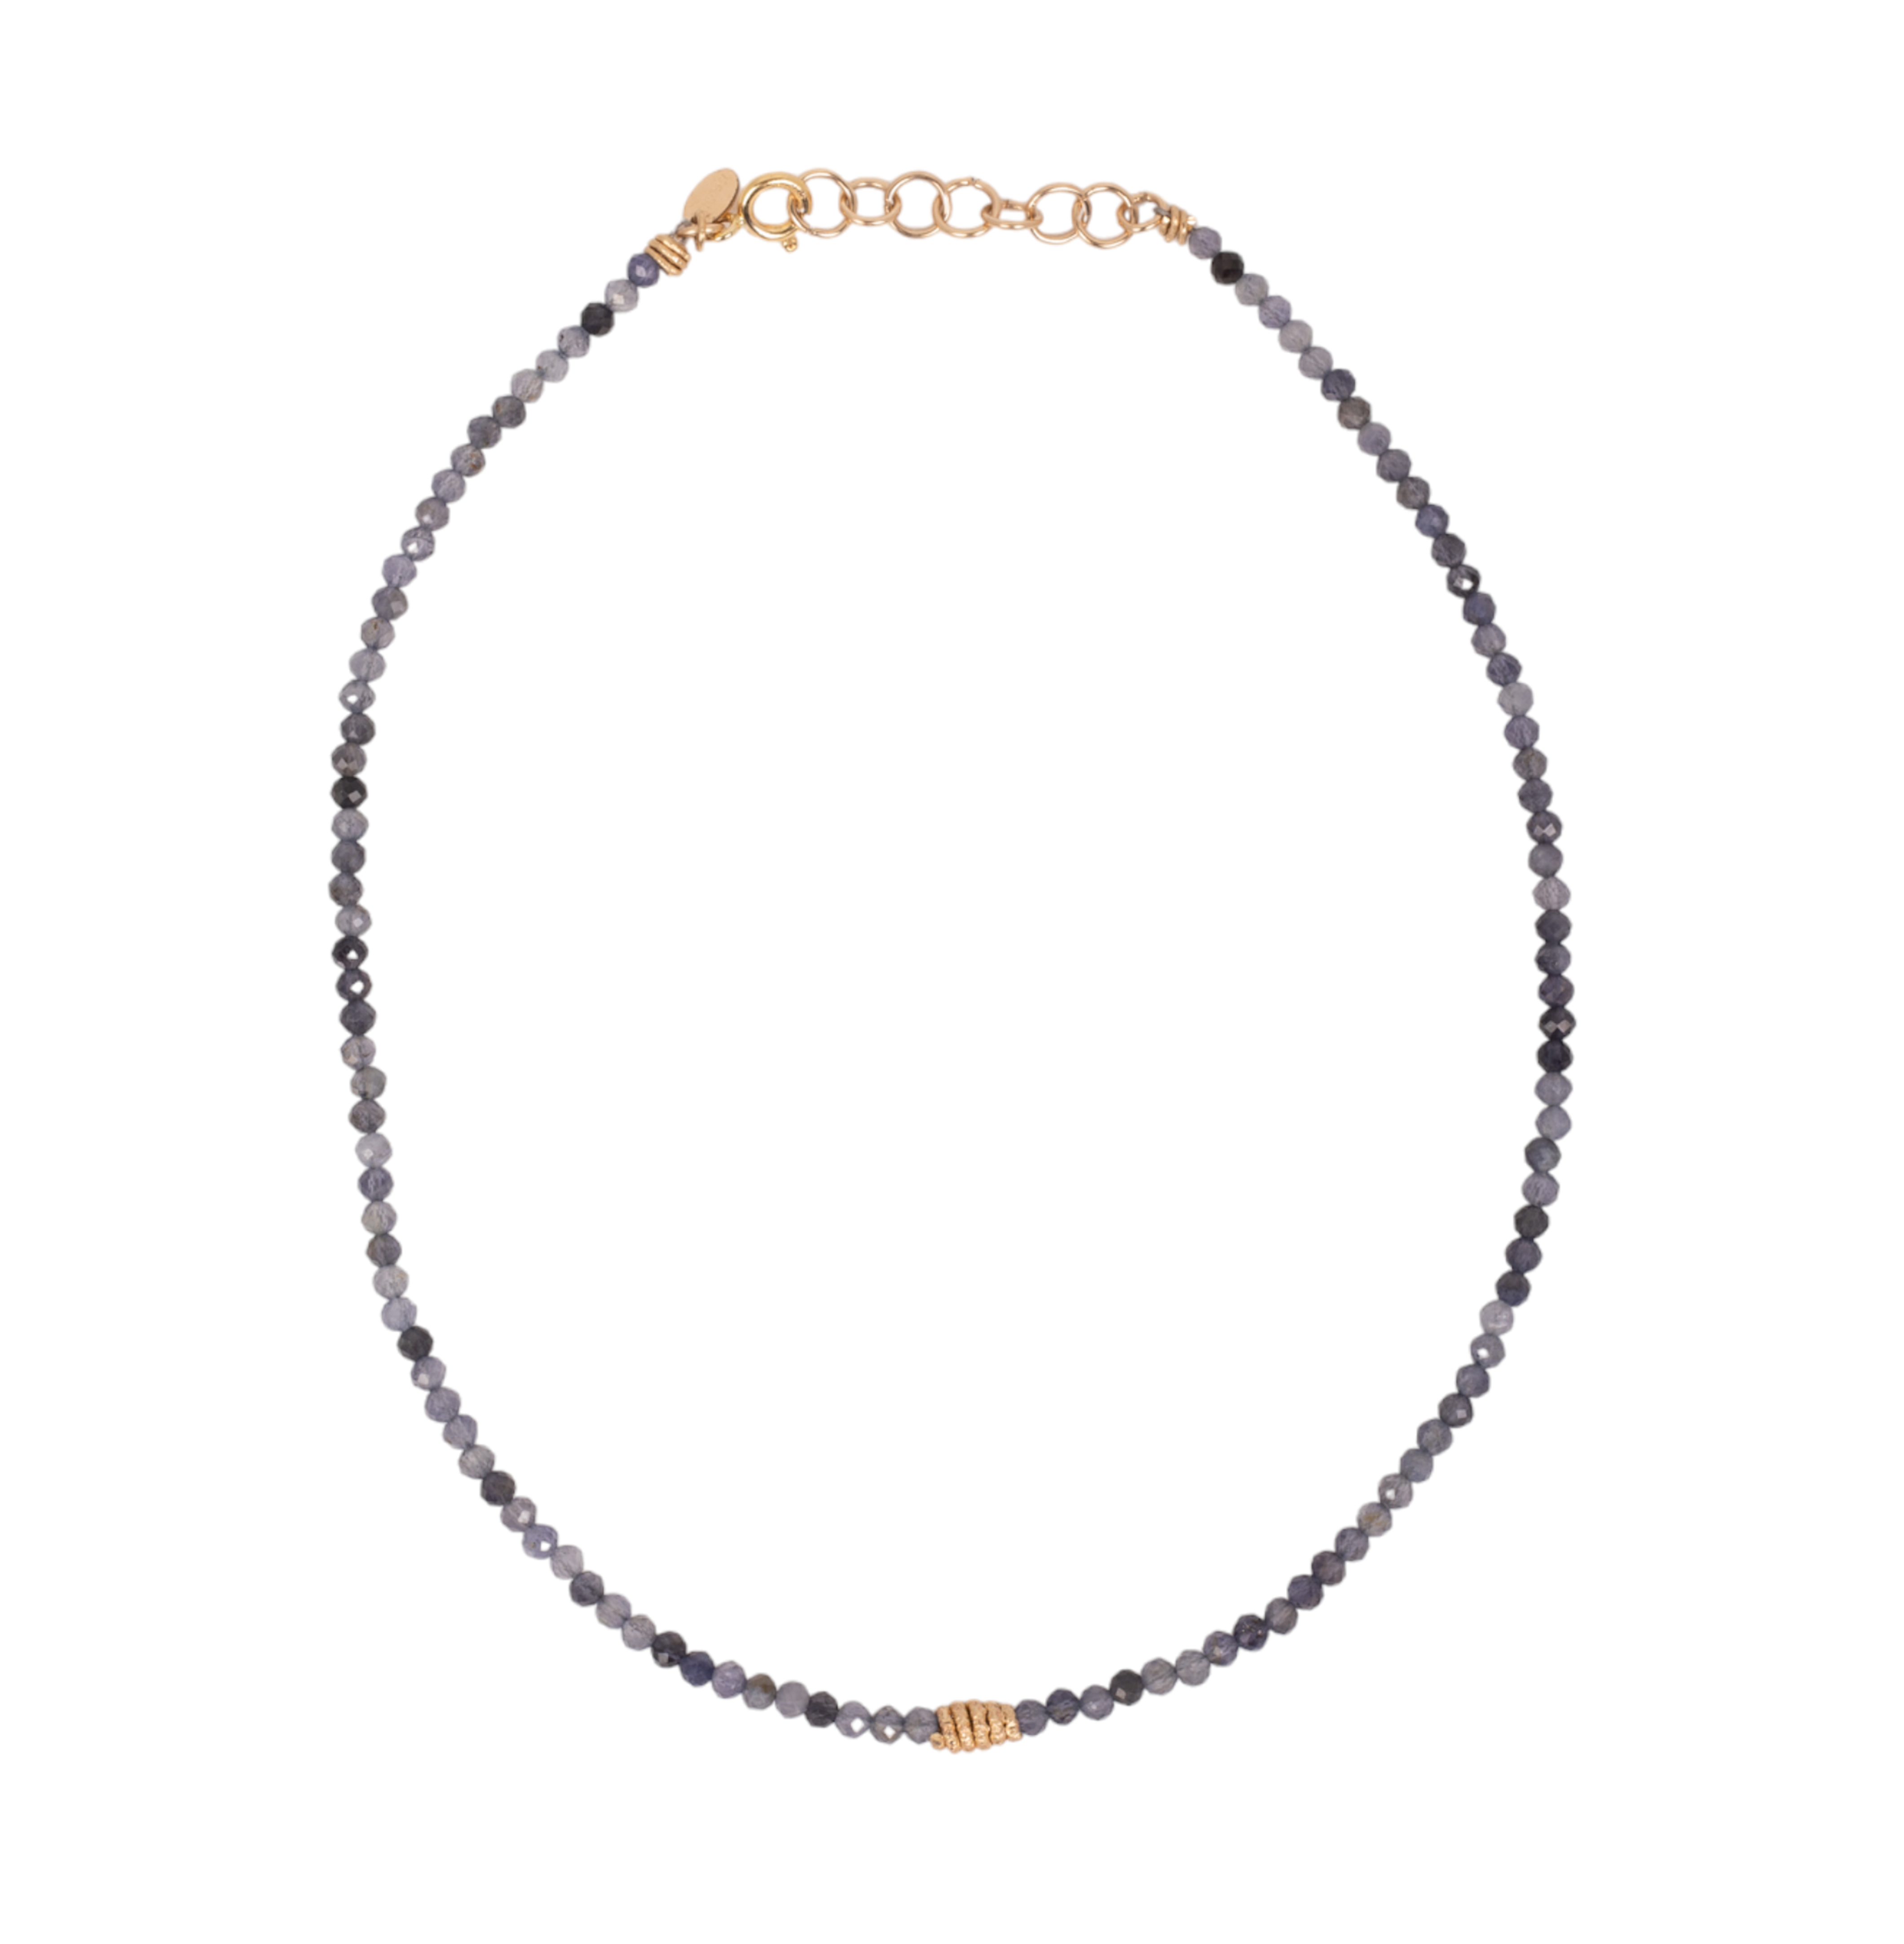 Diana Necklace #1 - Iolite Necklaces TARBAY   